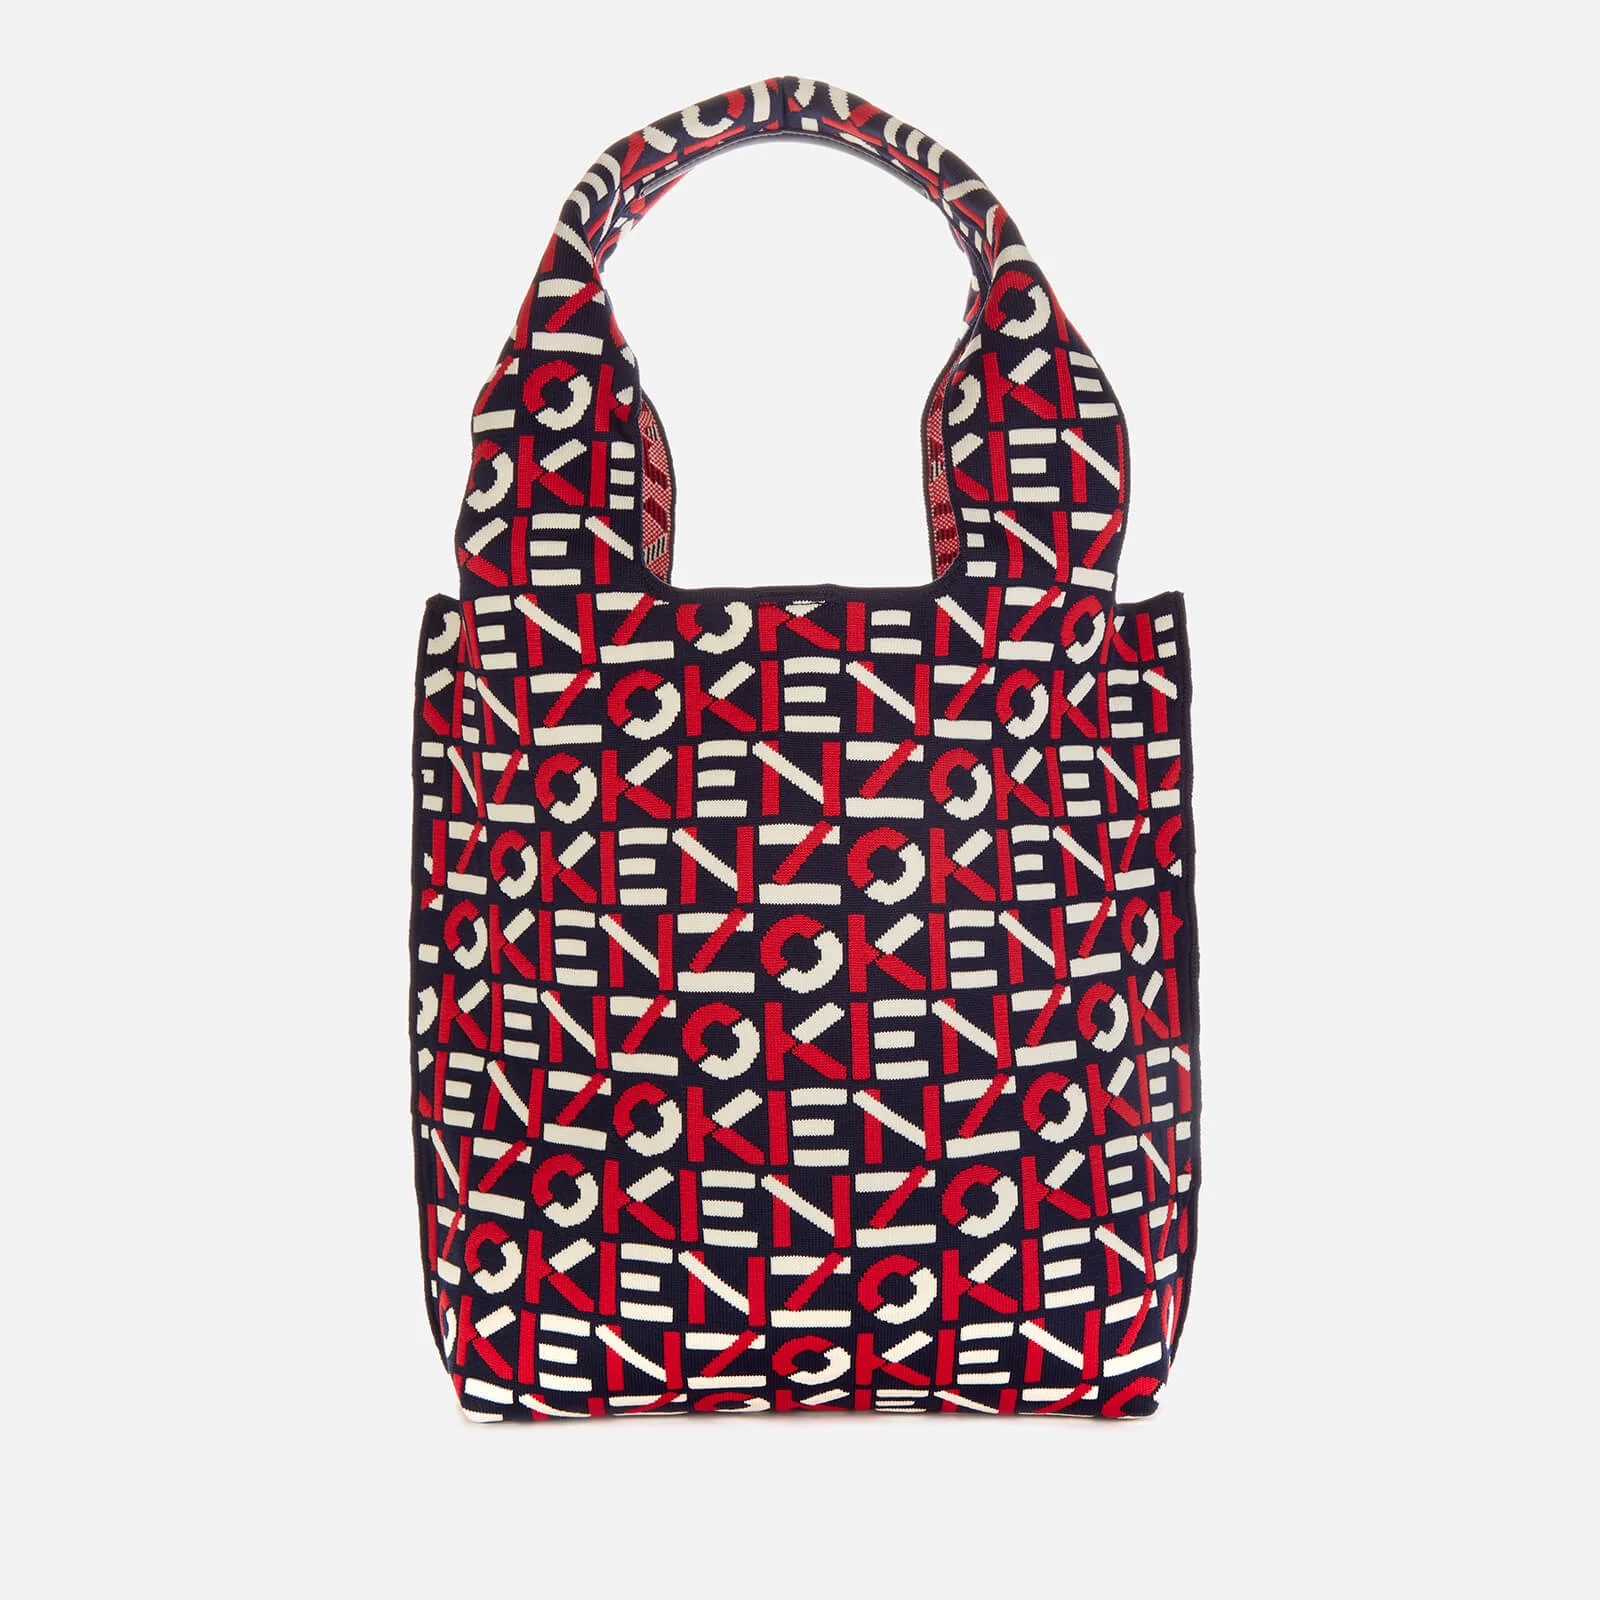 KENZO Women's Recycled Monogram Small Tote Bag - Medium Red Image 1